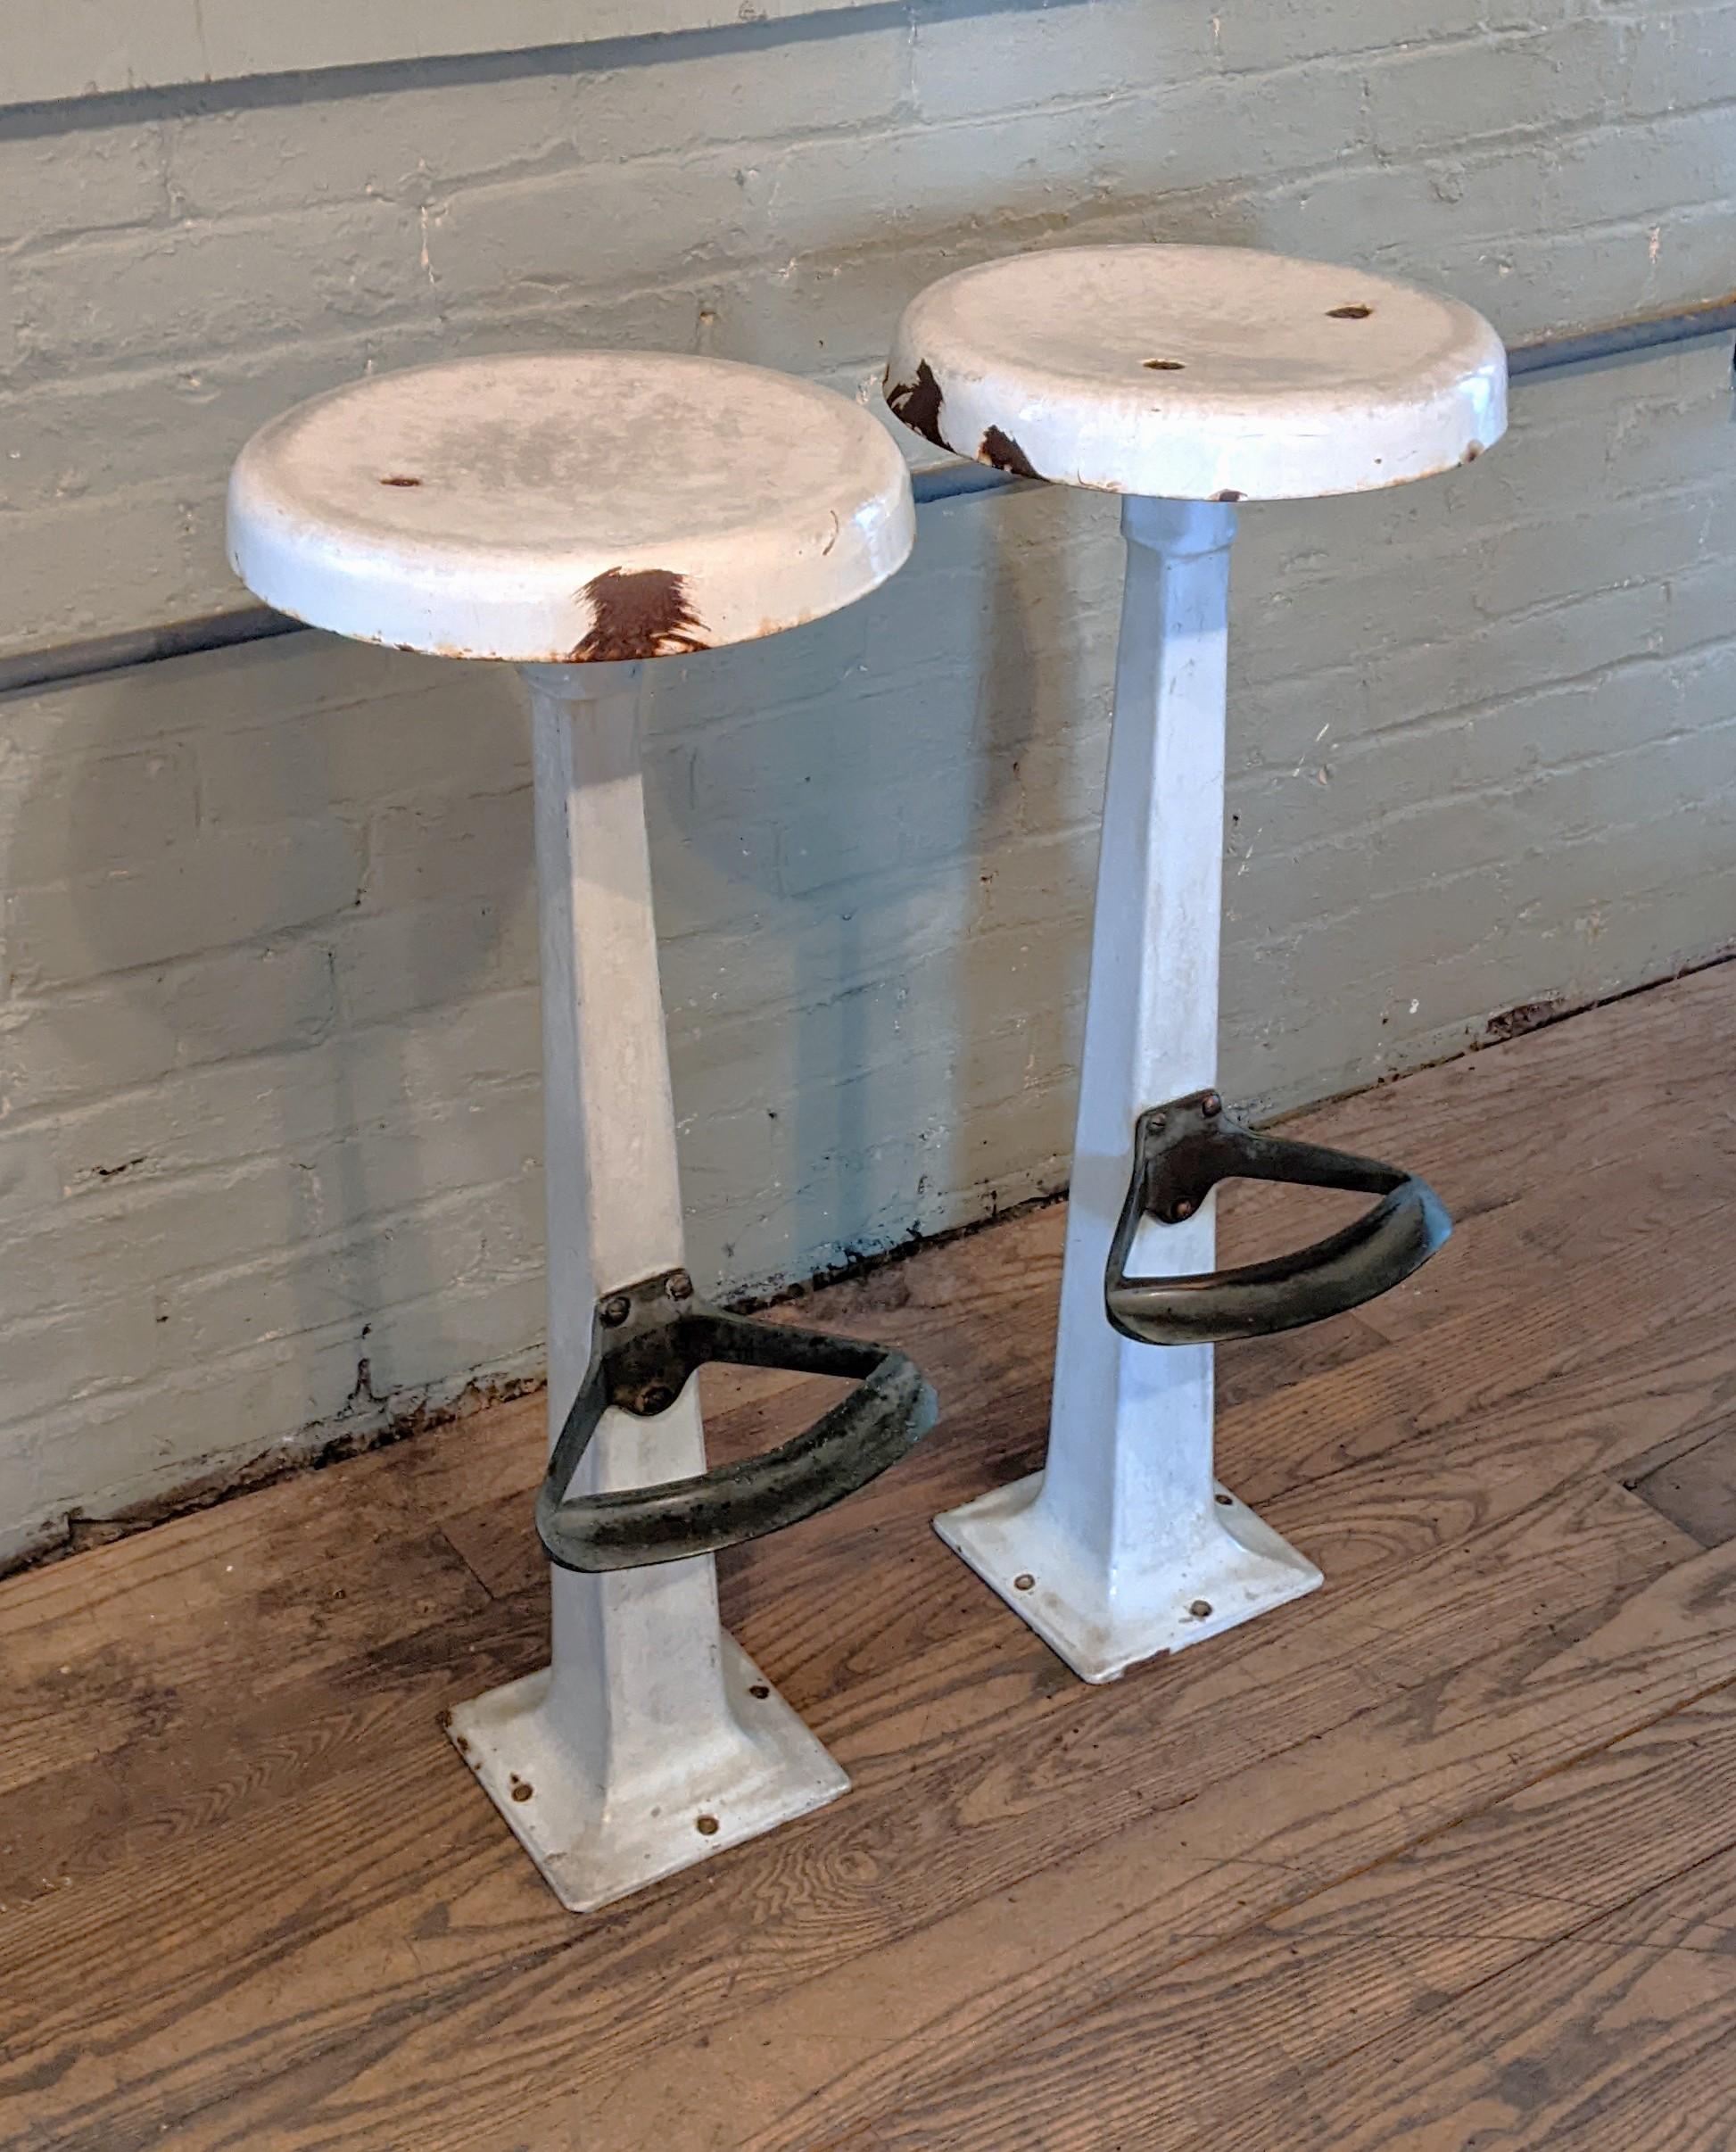 Pair of vintage diner stools

Seat height: 30 1/2